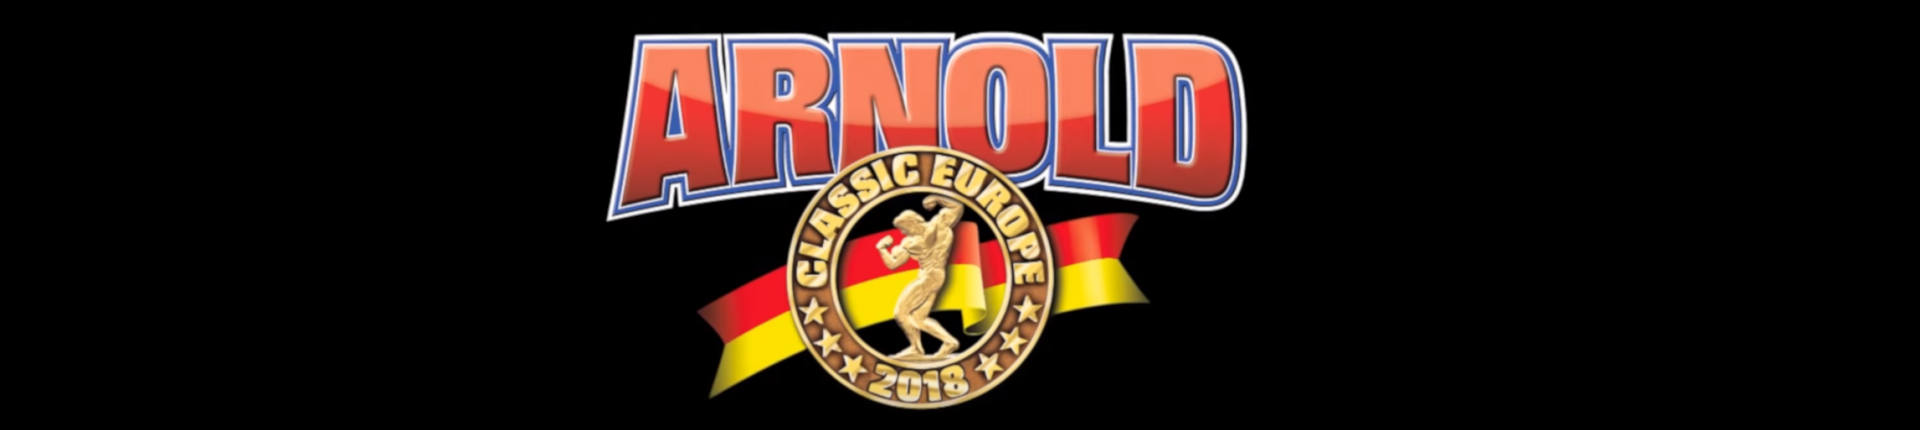 Arnold Classic Europe 2018 Tuż, Tuż!